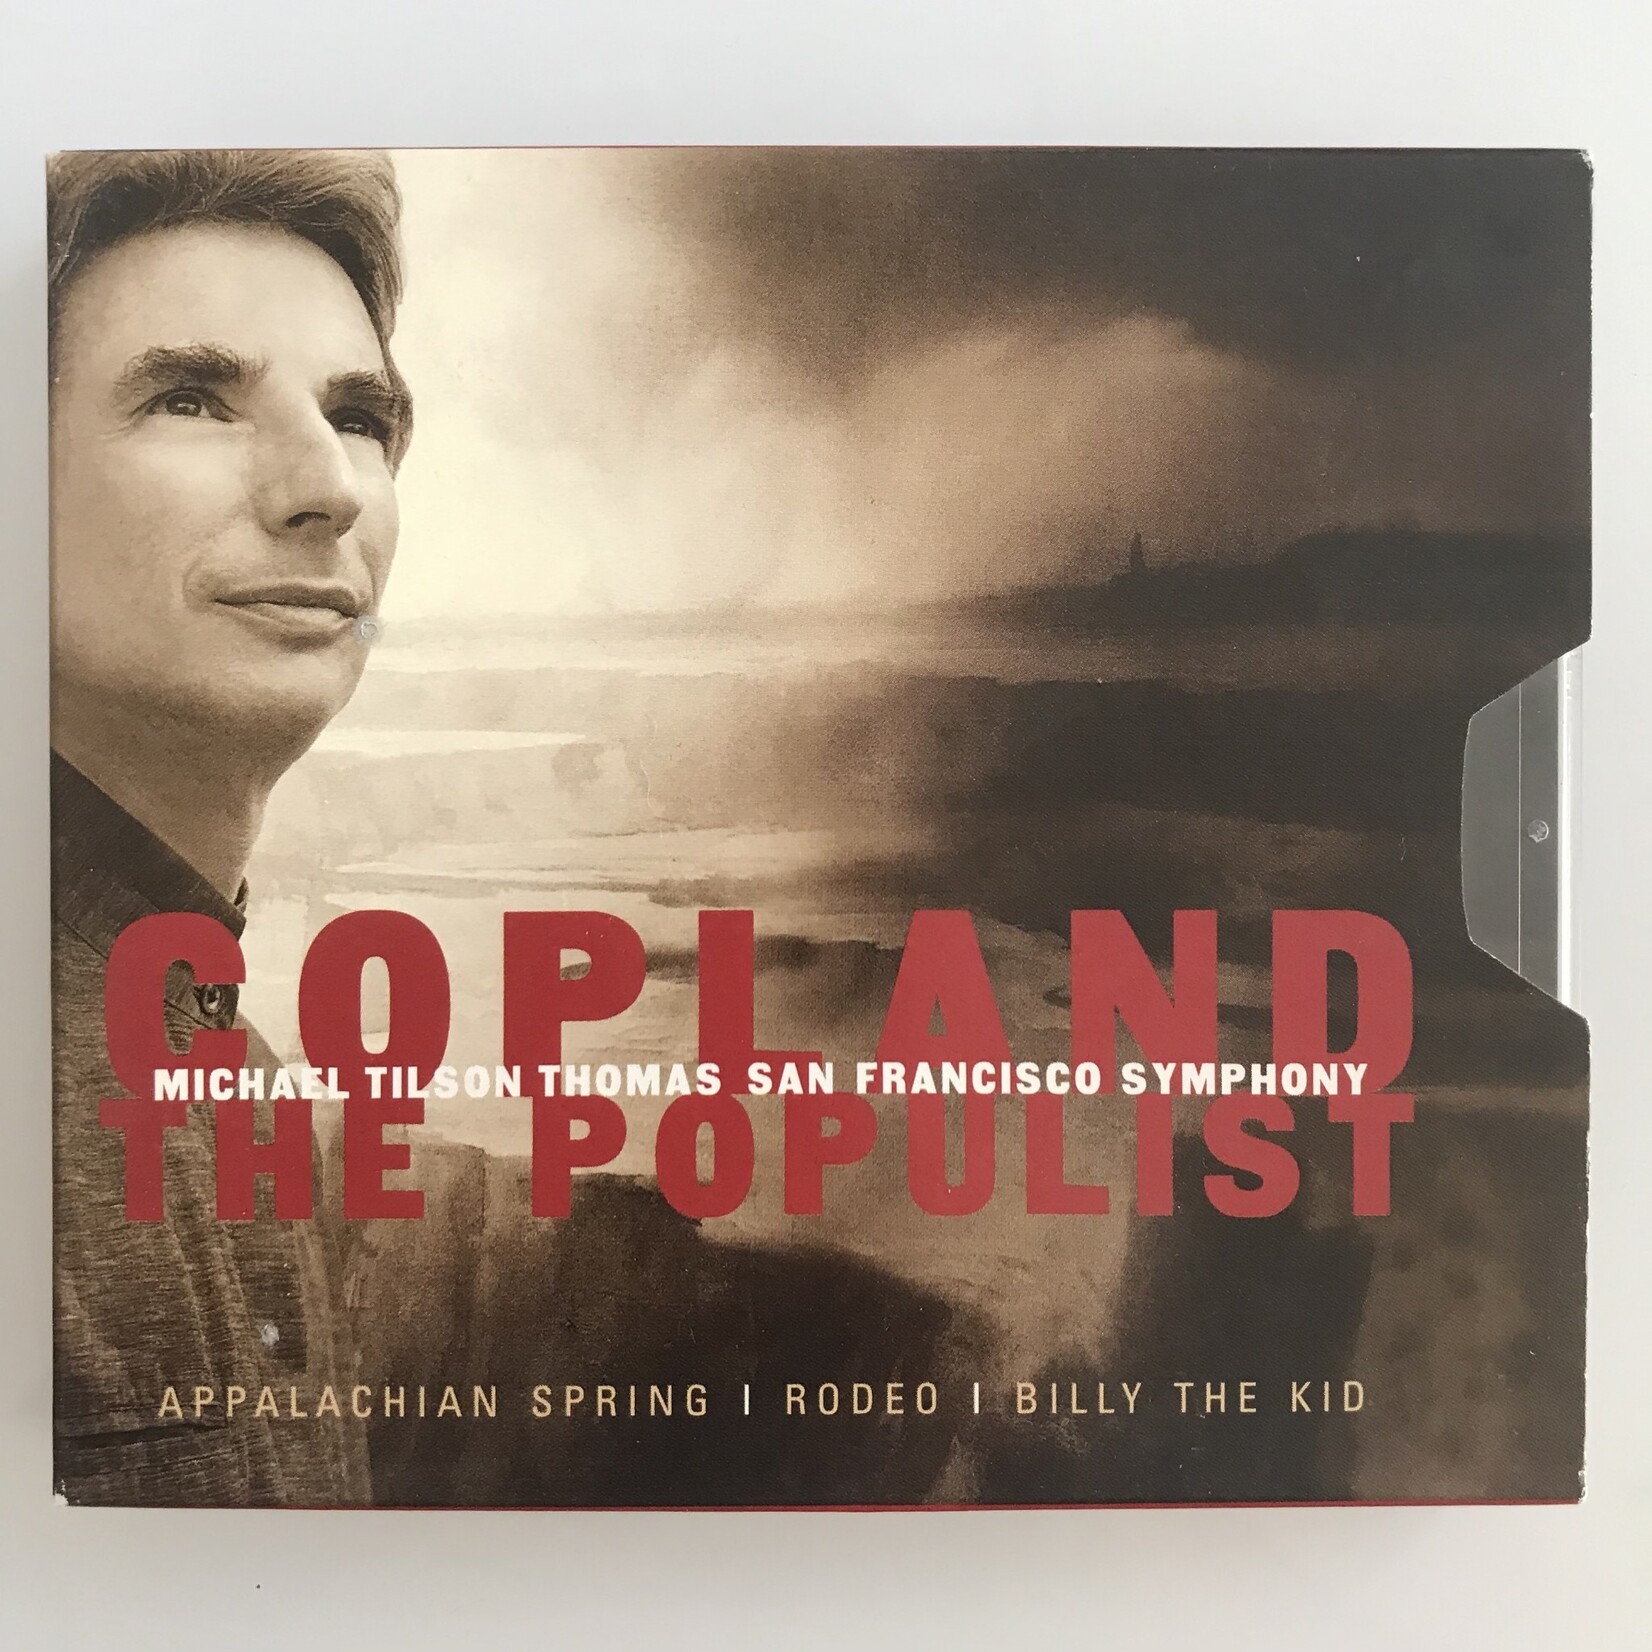 San Francisco Symphony - Aaron Copland 1900-90: The Populist - CD (USED)